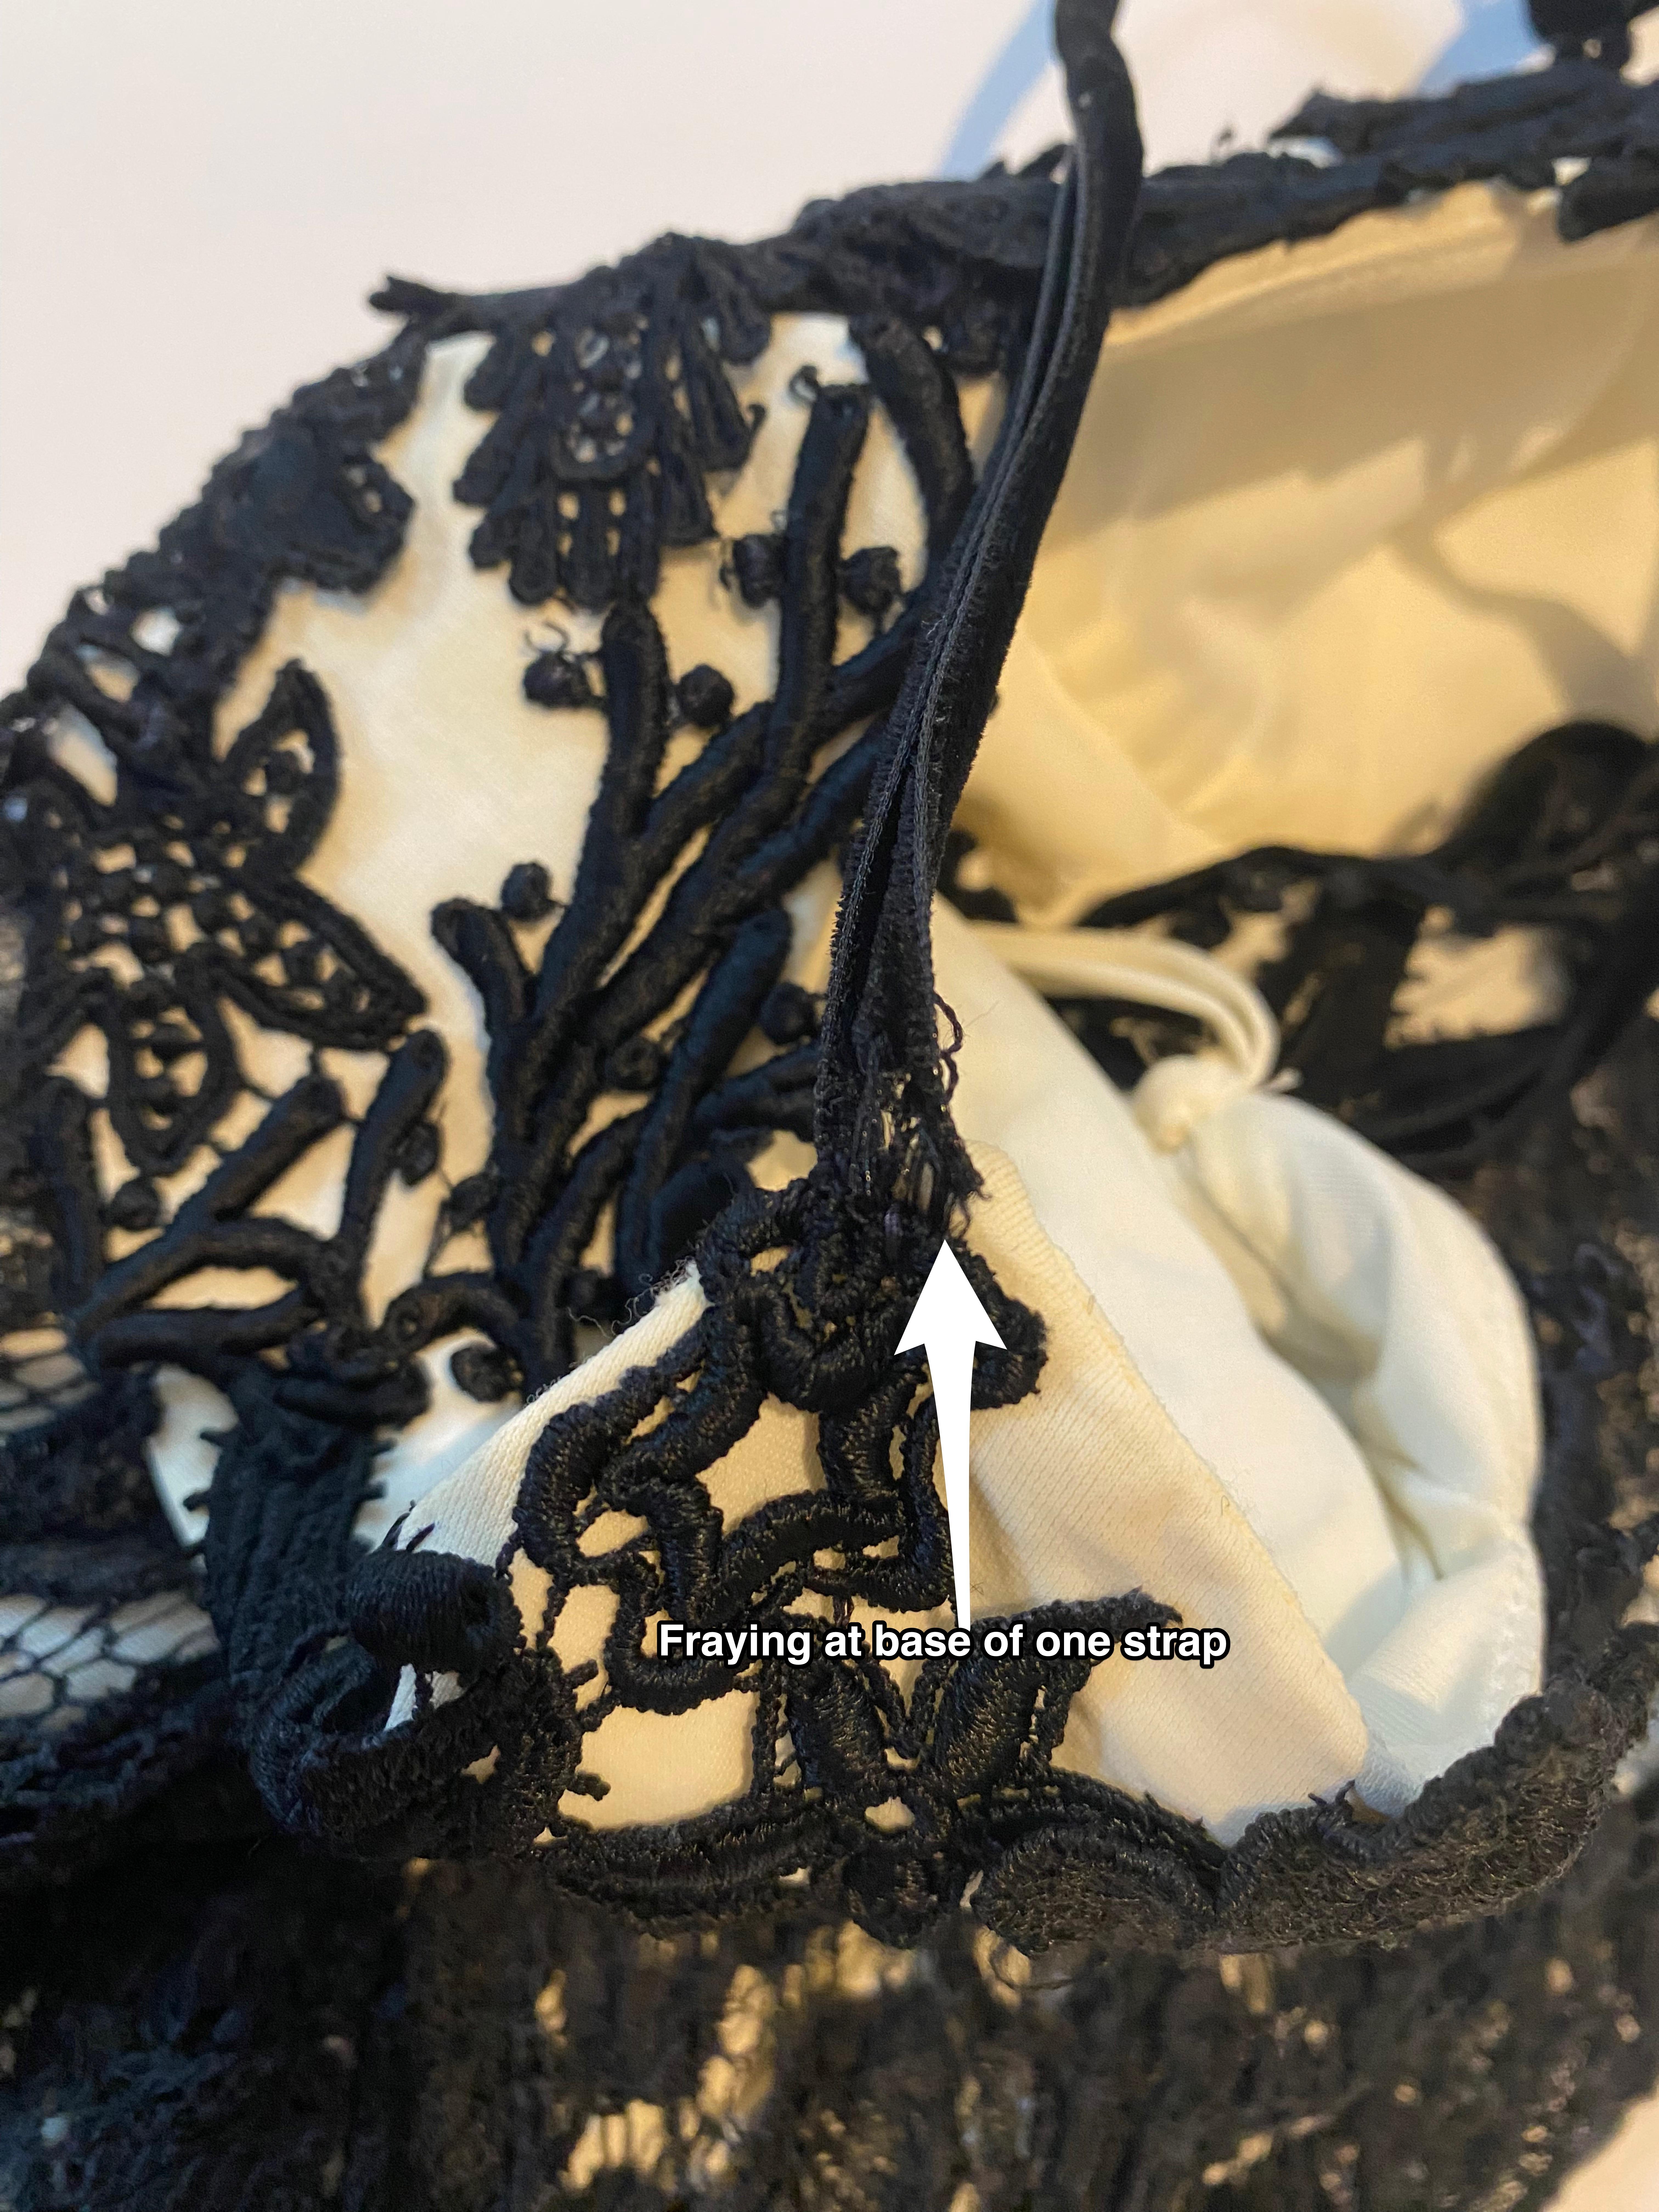 Lolita Lempicka FW 1995 Black white sheer crochet lace overlay bustier dress 40 For Sale 14